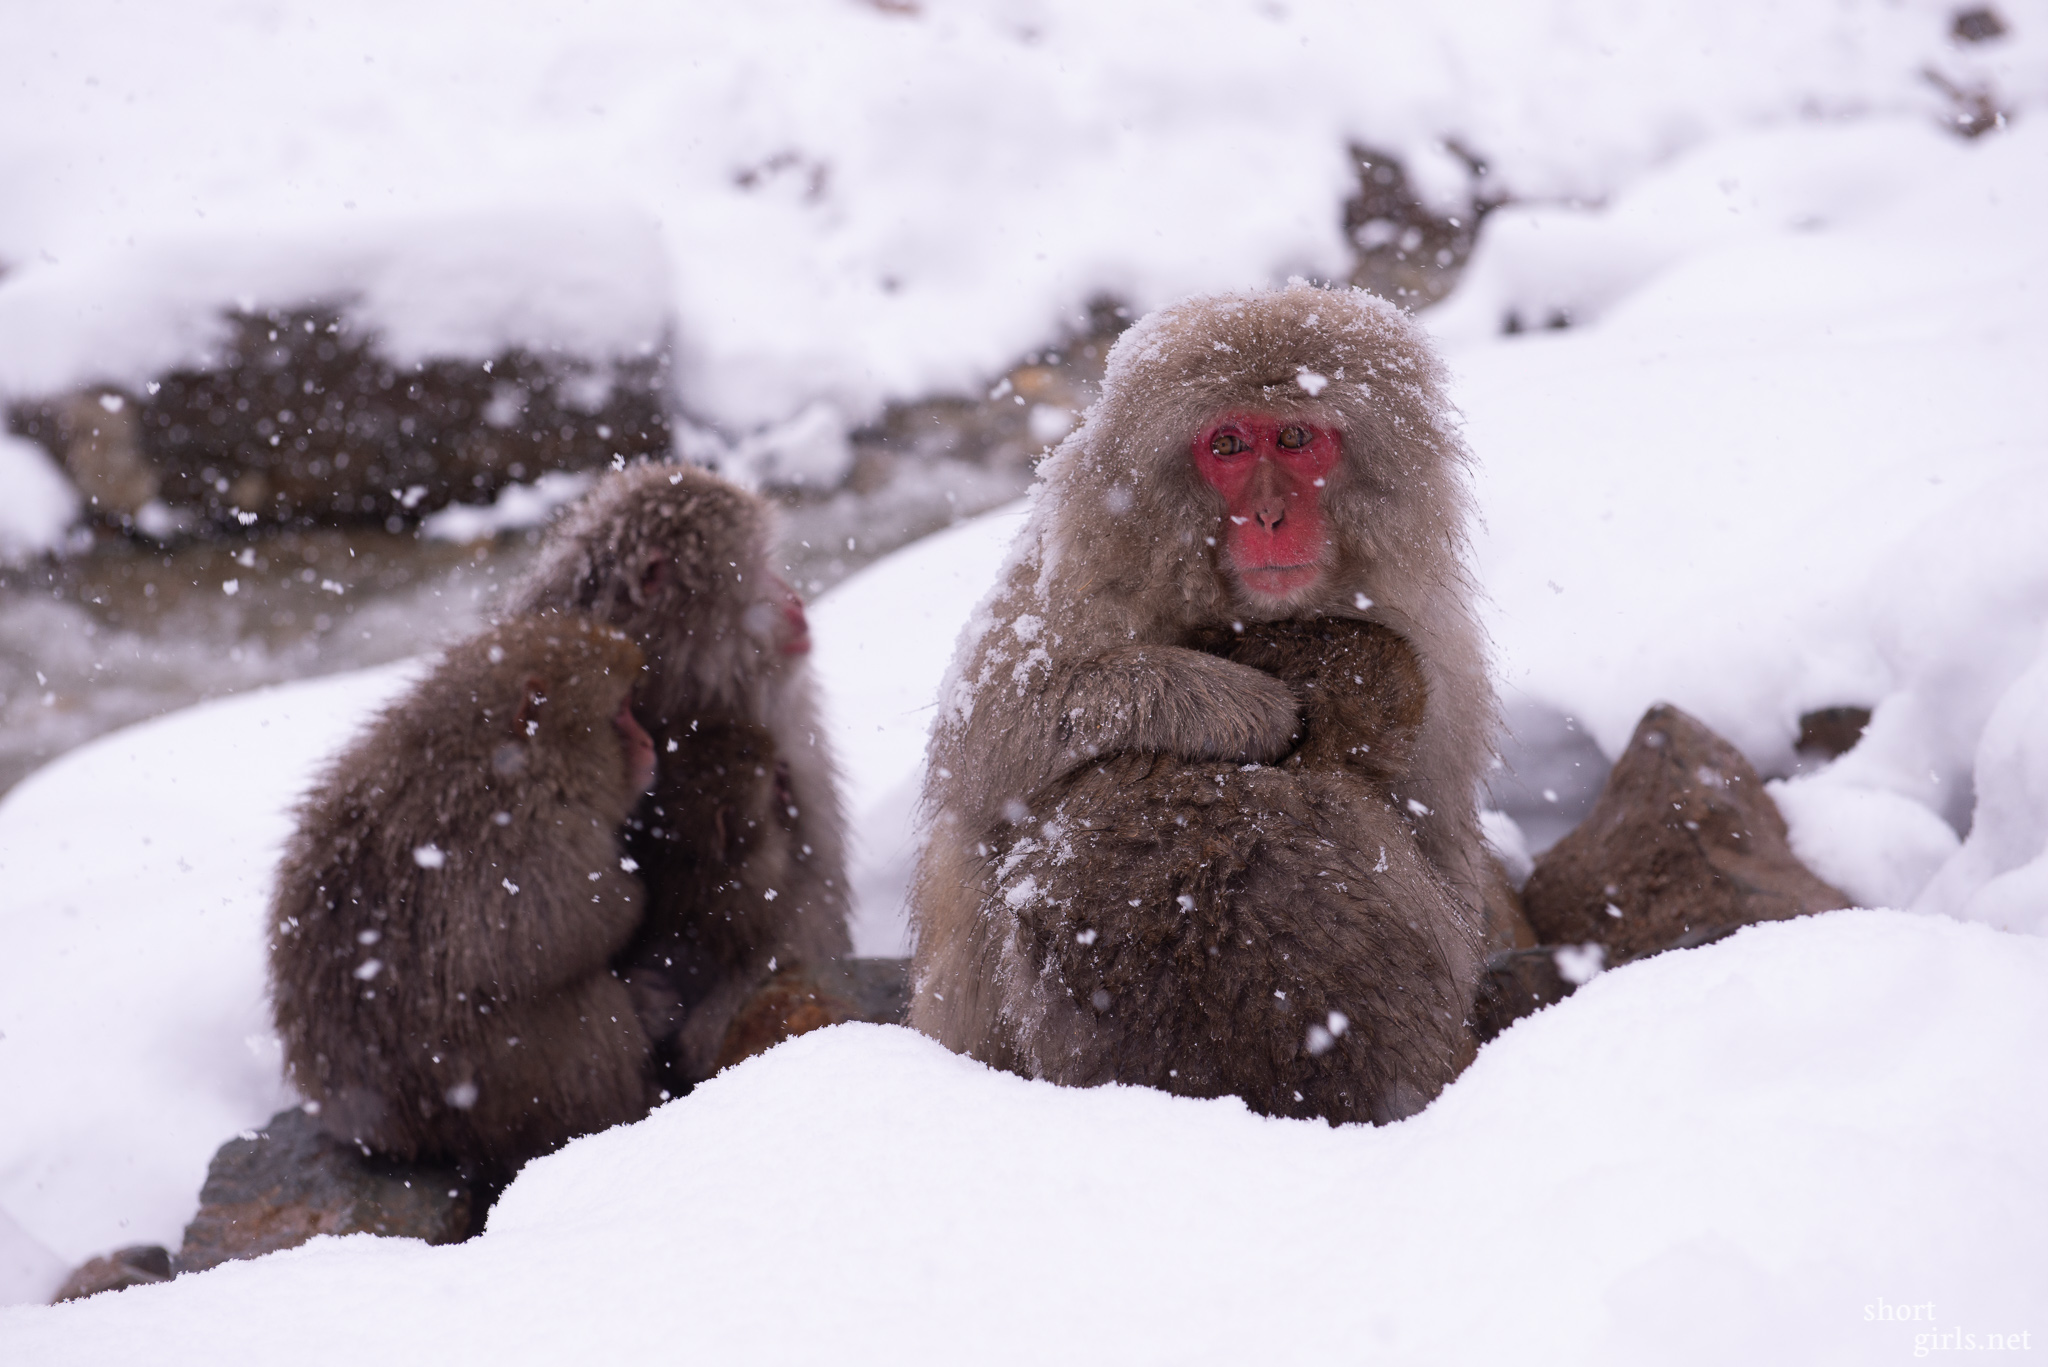 Day 17 – Snow monkeys at Jigokudani Onsen